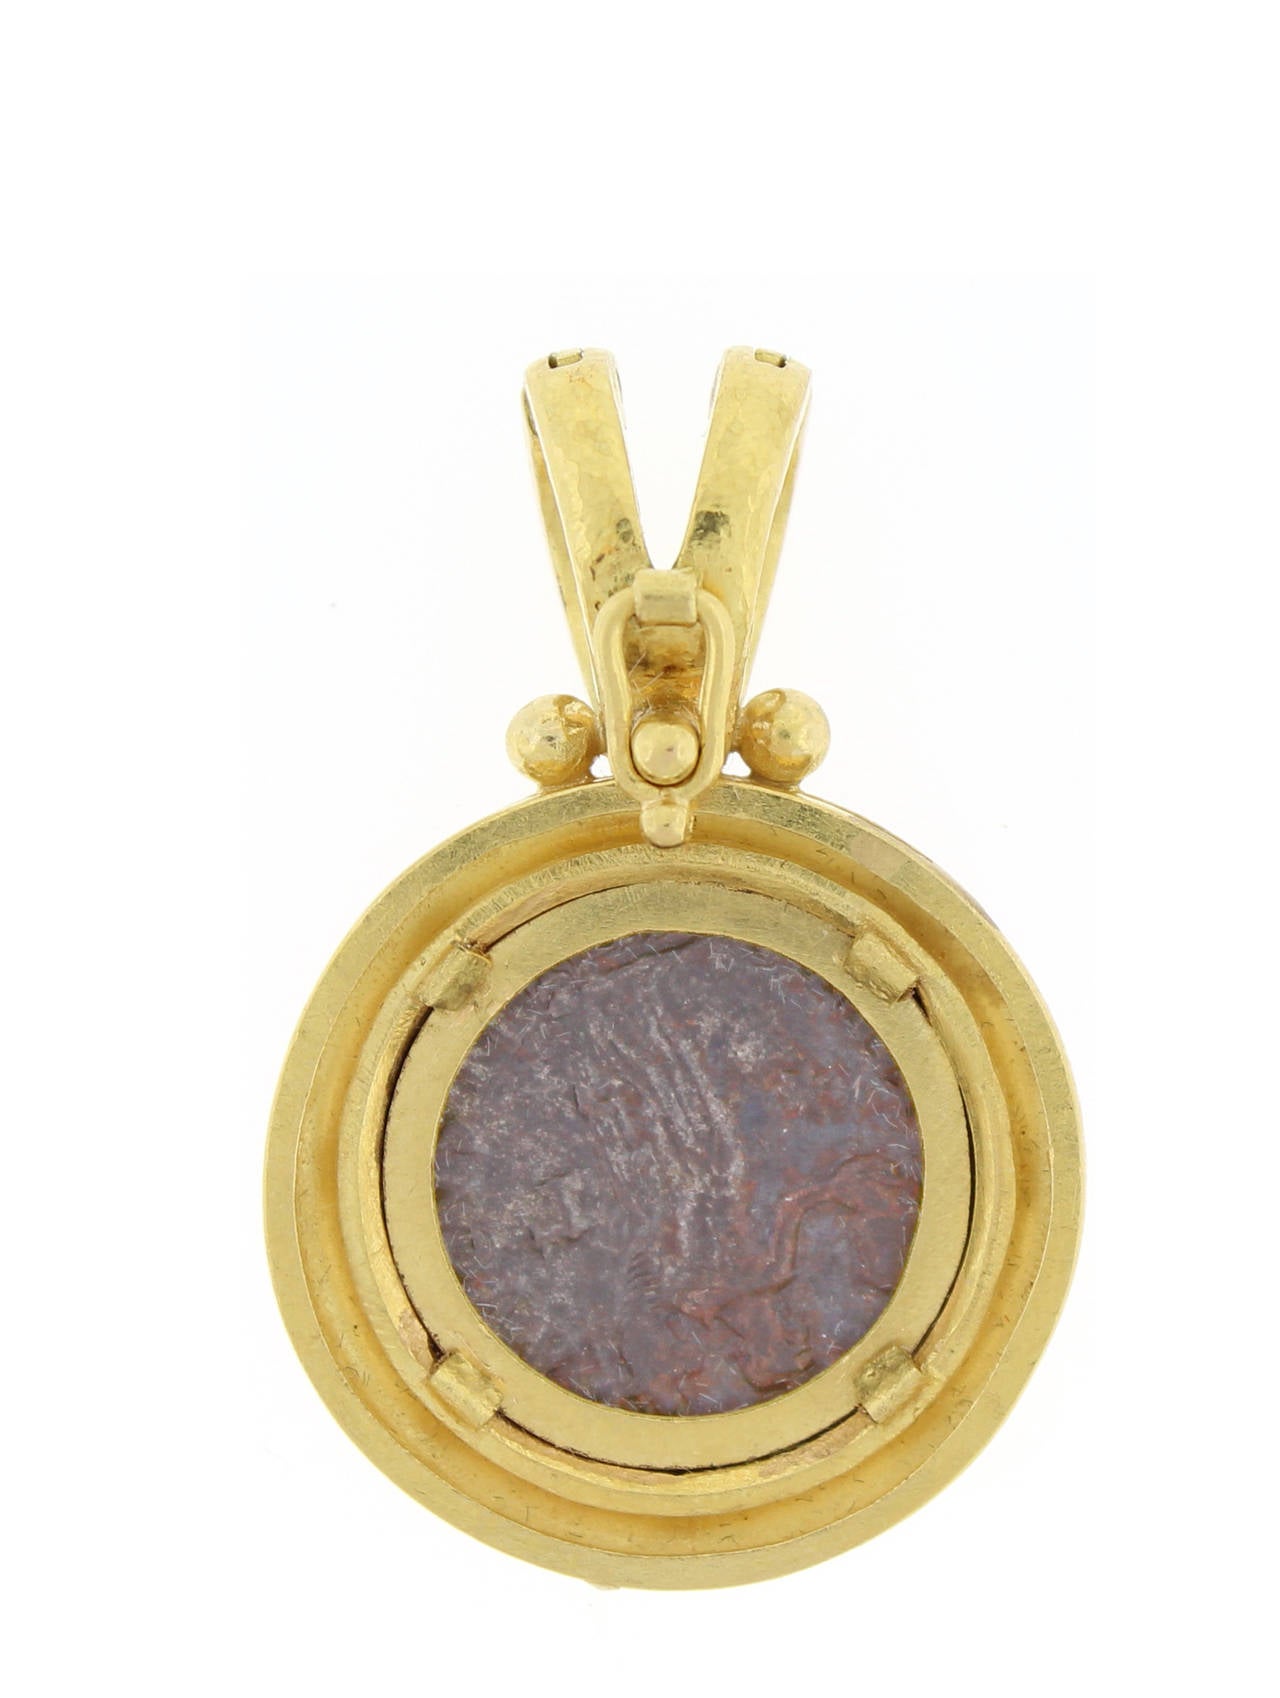 19 Karat yellow gold Elizabeth Locke antique coin pendant with snap bail.